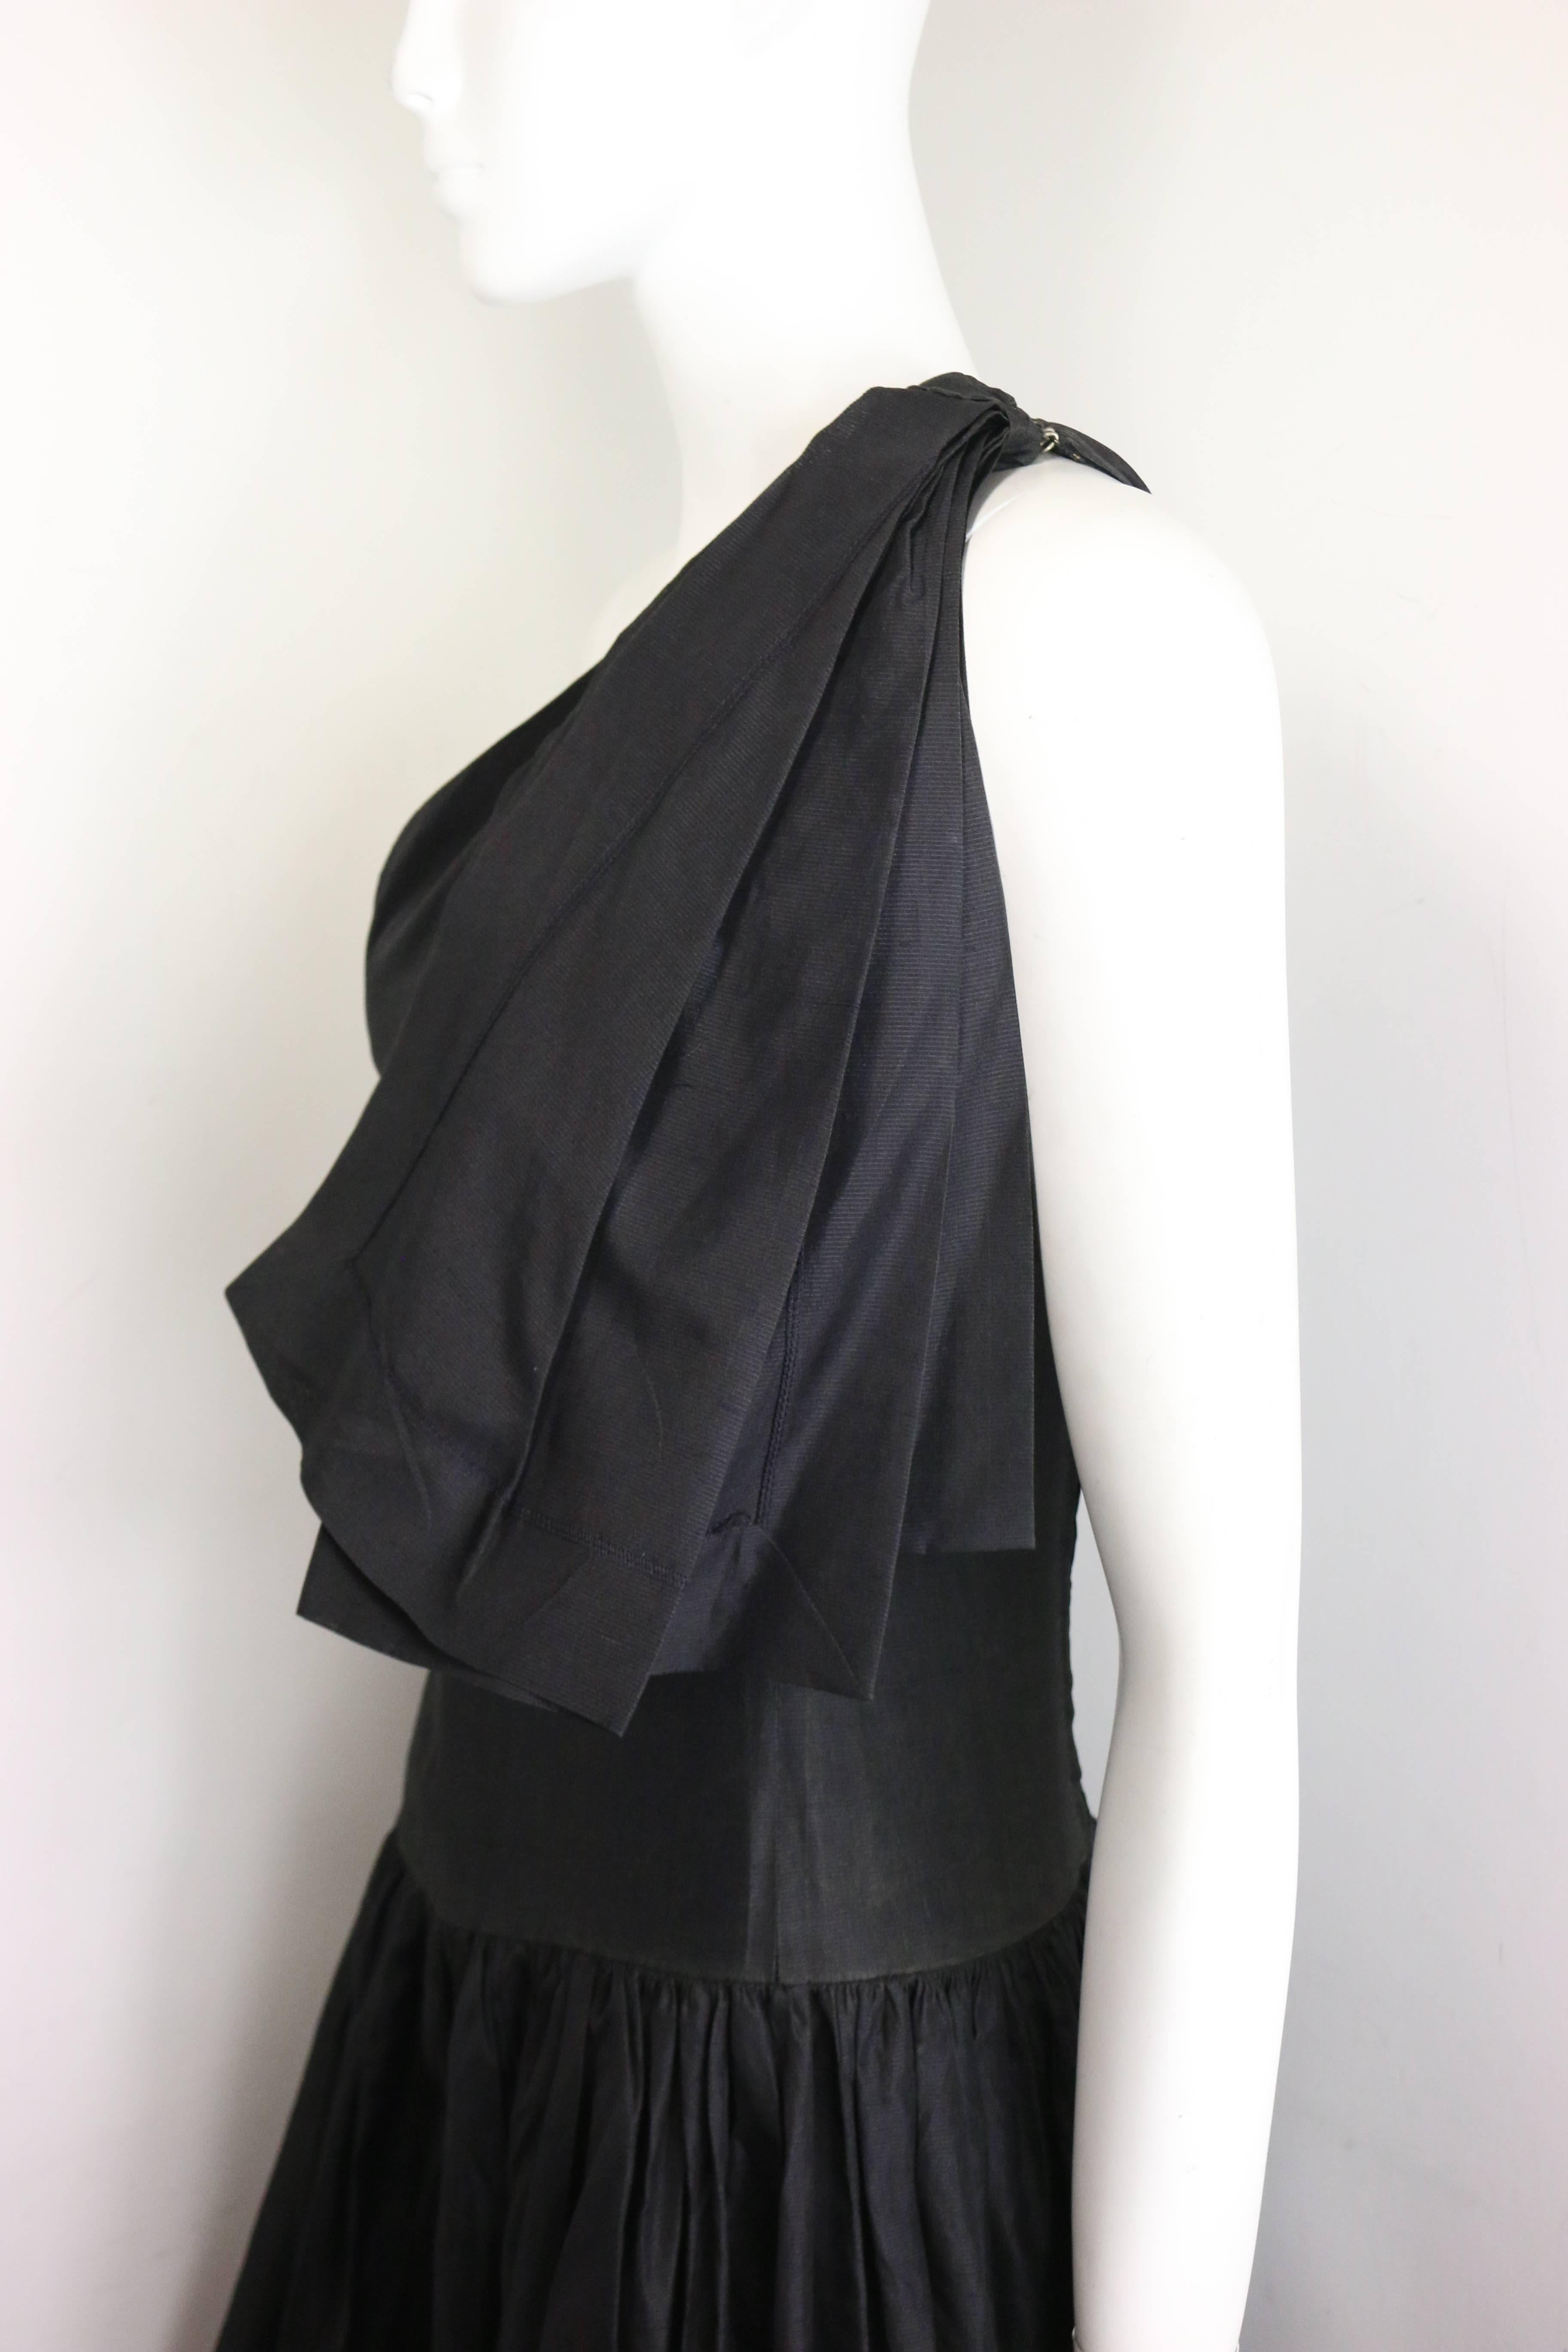 Chanel Black Silk Taffeta One Shoulder Evening Gown (Museum Quality ...